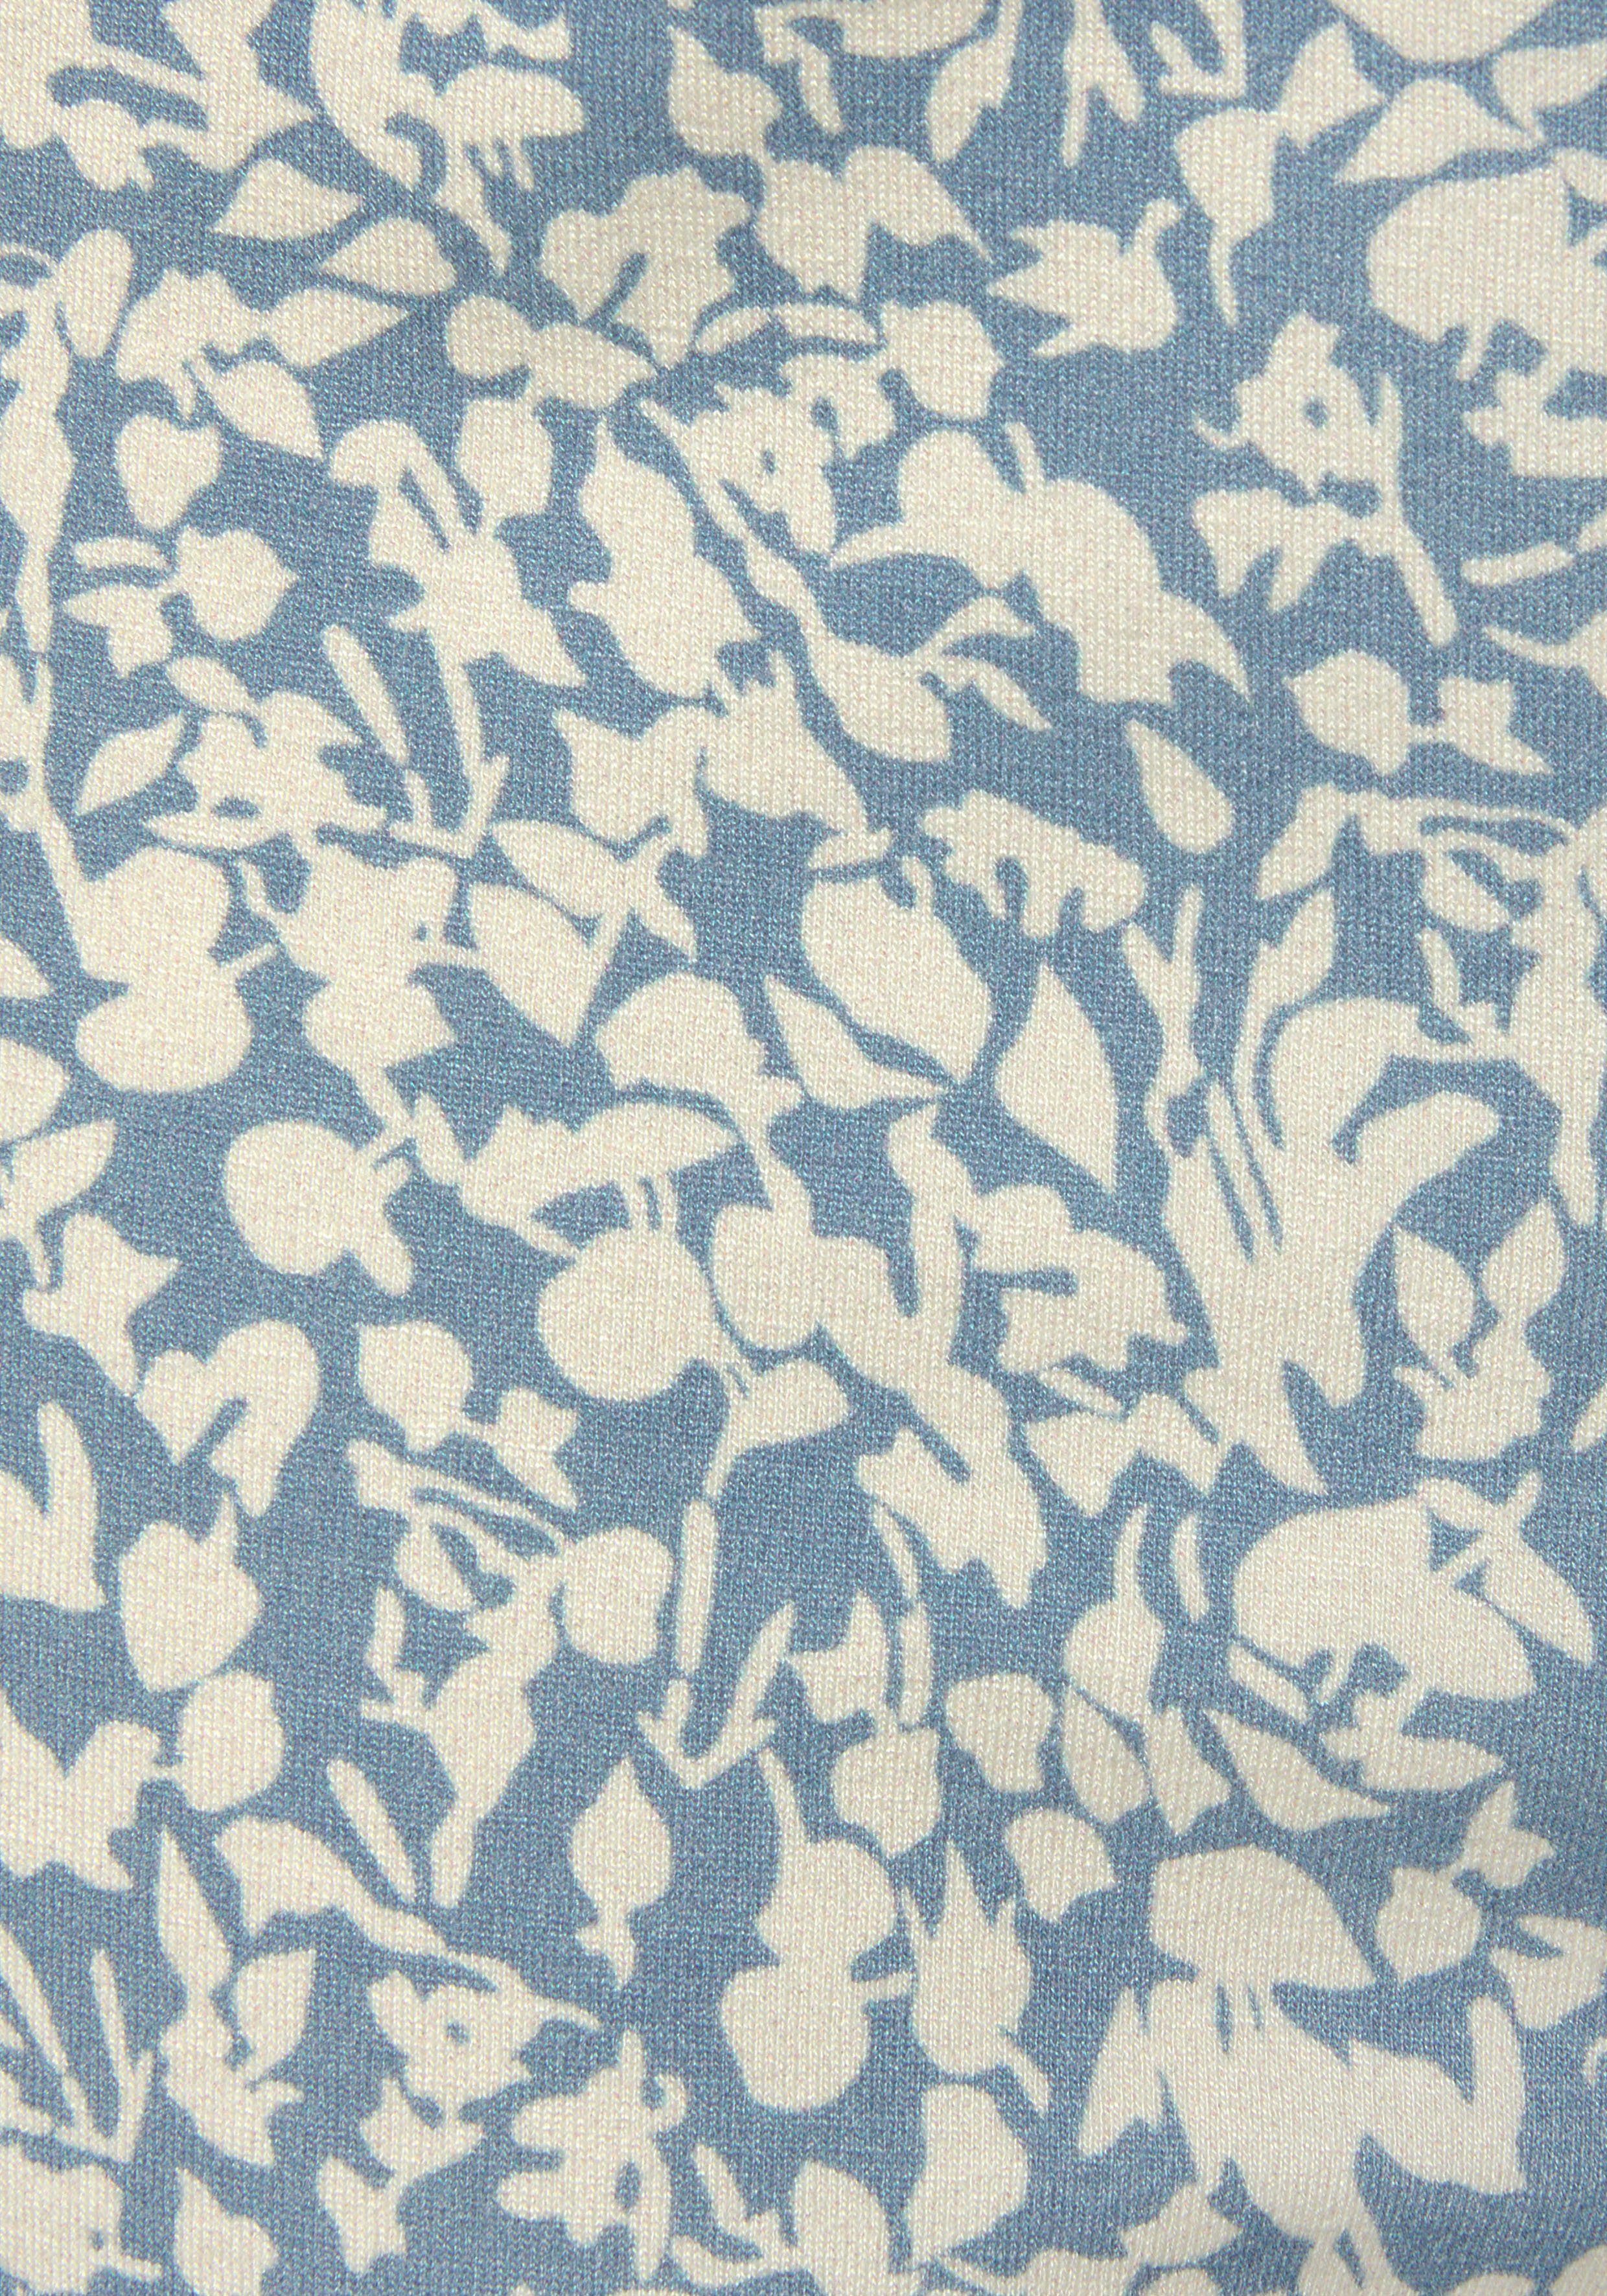 Vivance mit Hosenrock Blumendruck blau-creme-bedruckt